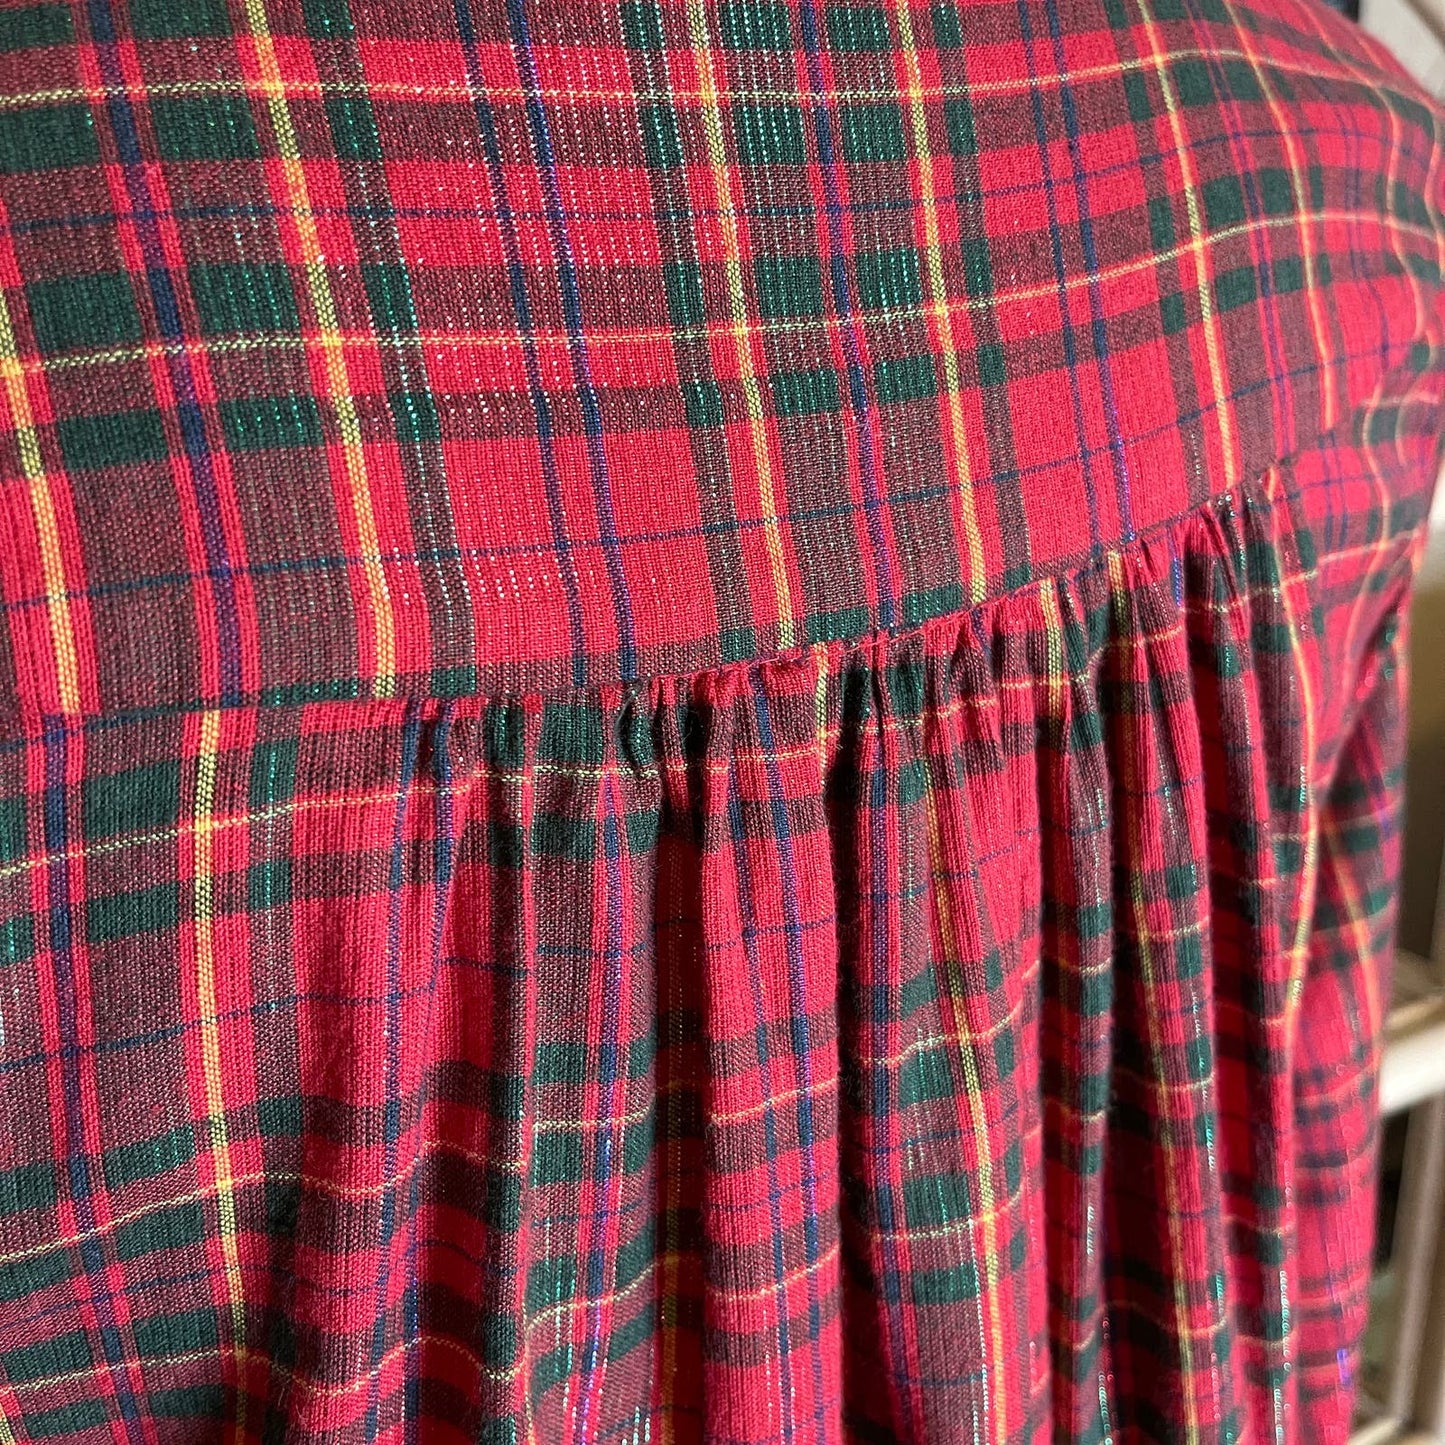 Vintage 90s Red Plaid Cotton Shirt with Lurex Stripes Peter Pan Collar Size M